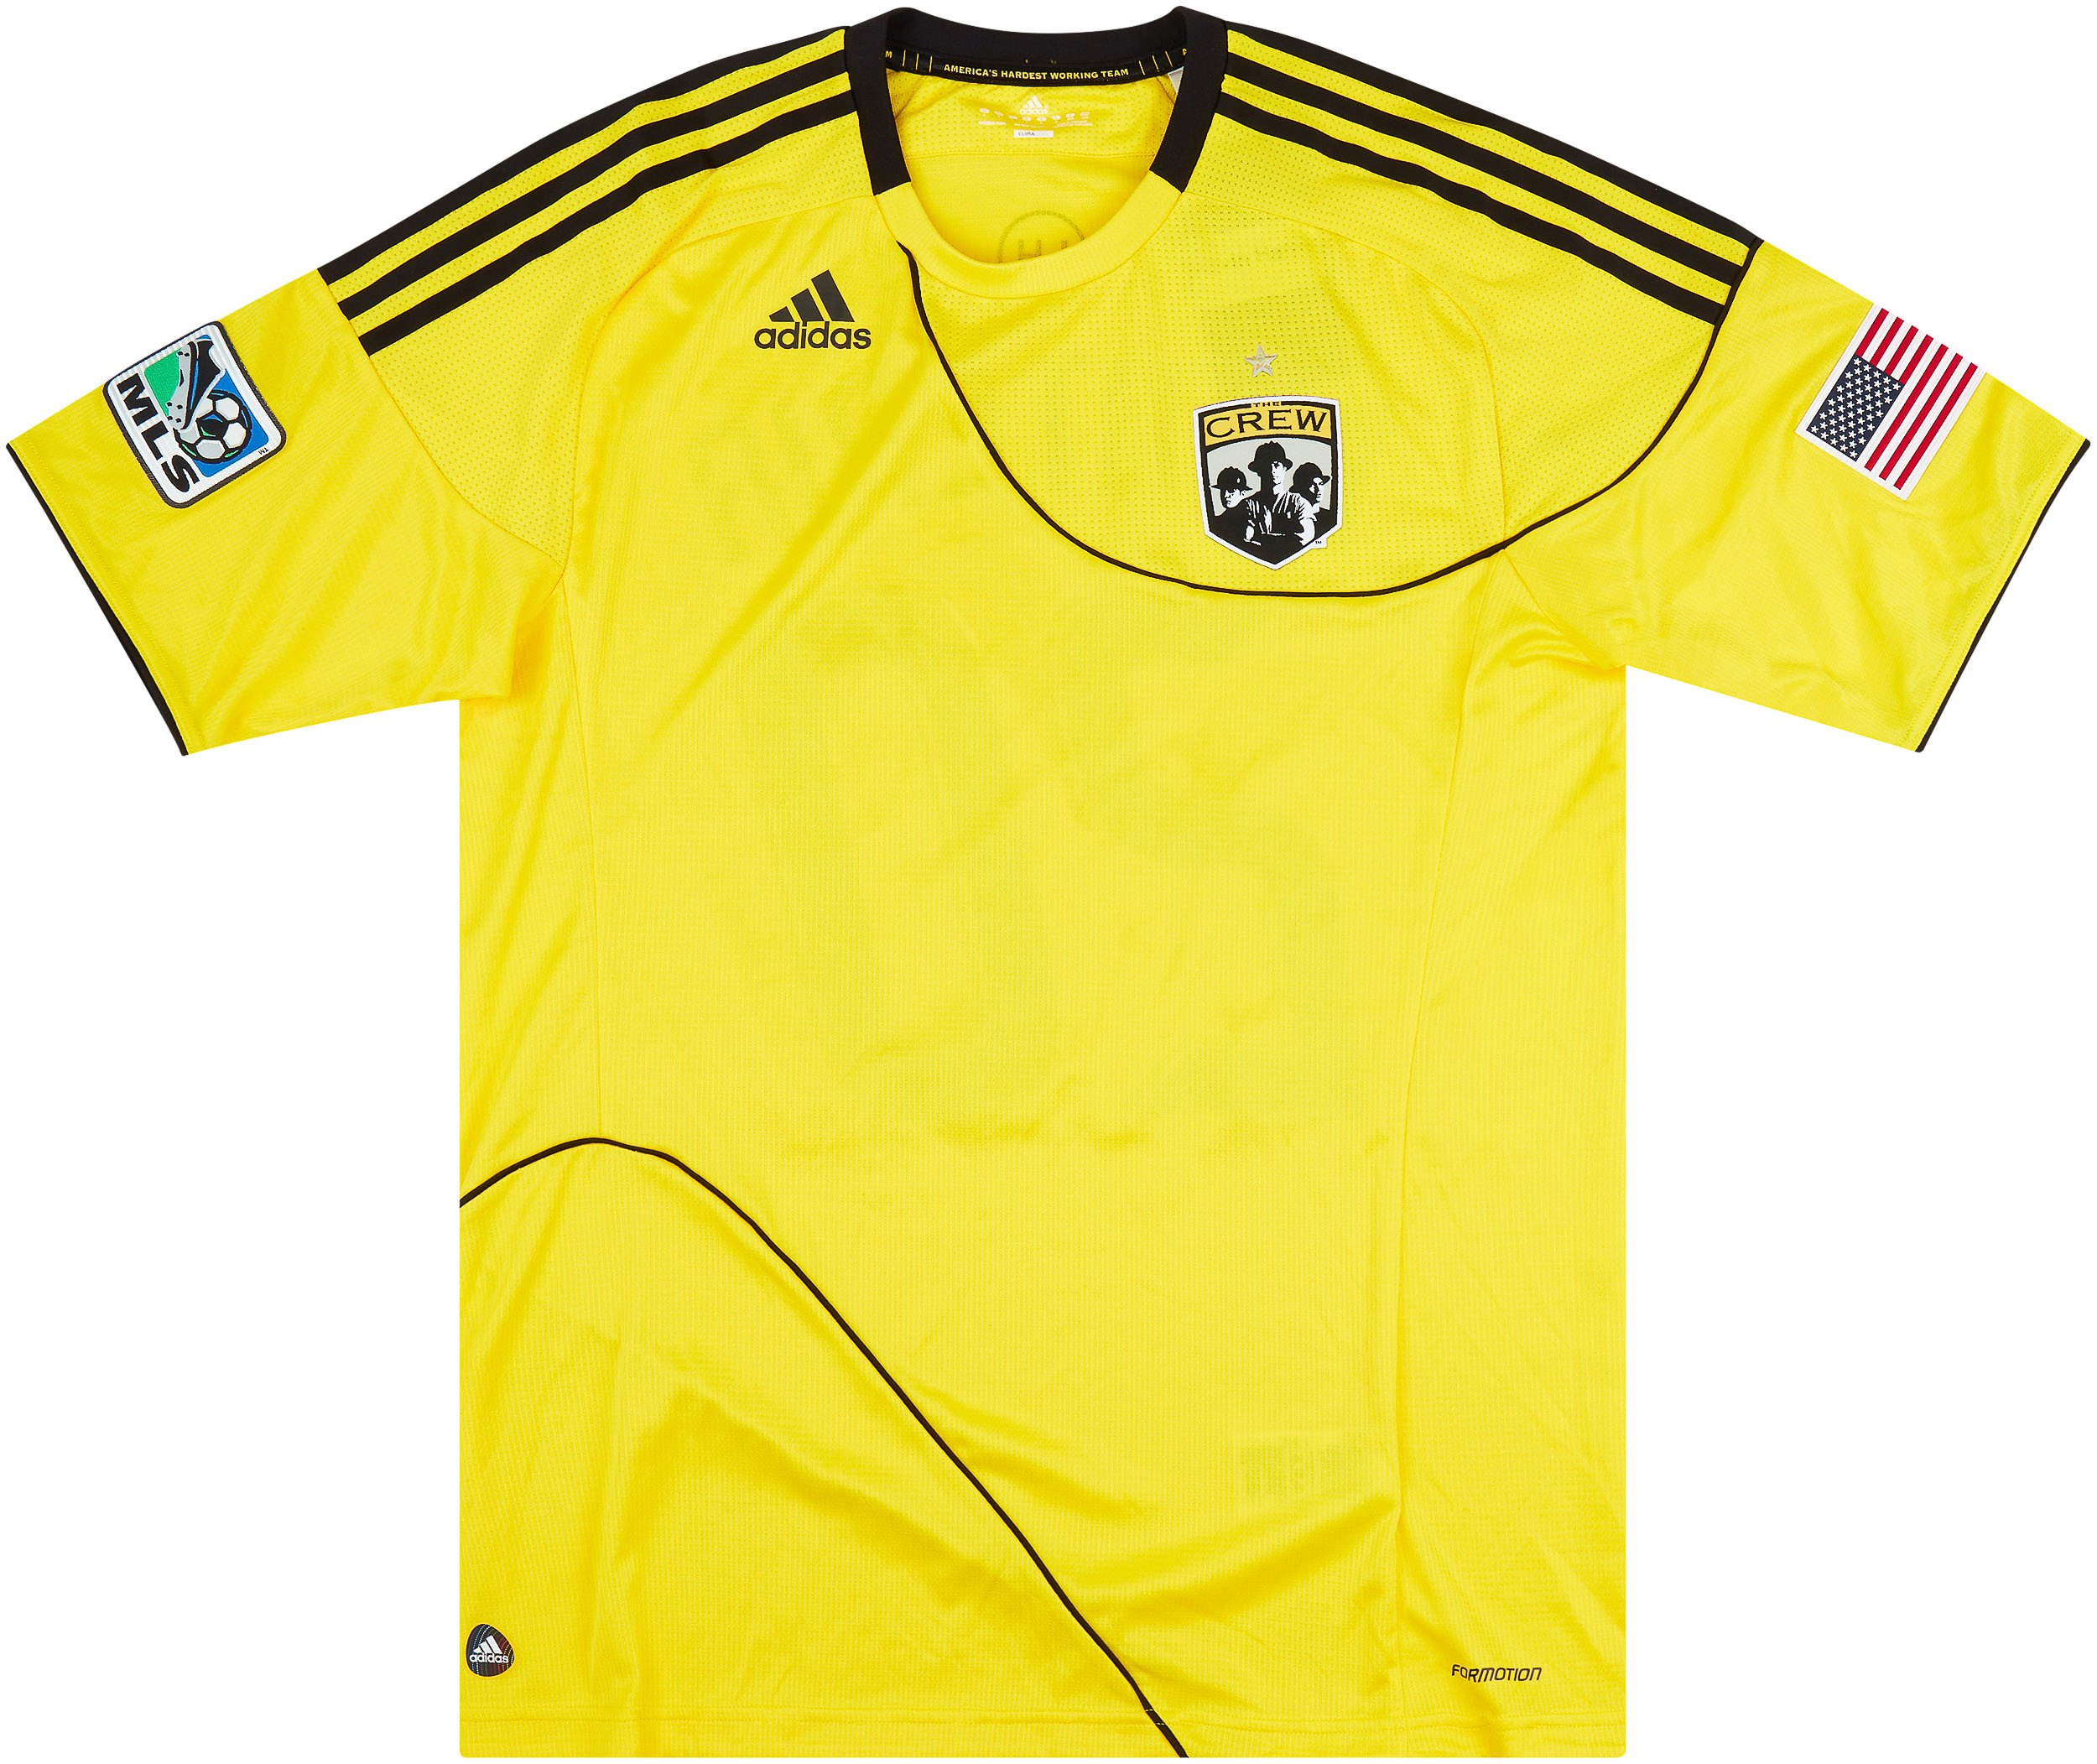 2011 Columbus Crew Match Issue Home Shirt Renteria #20